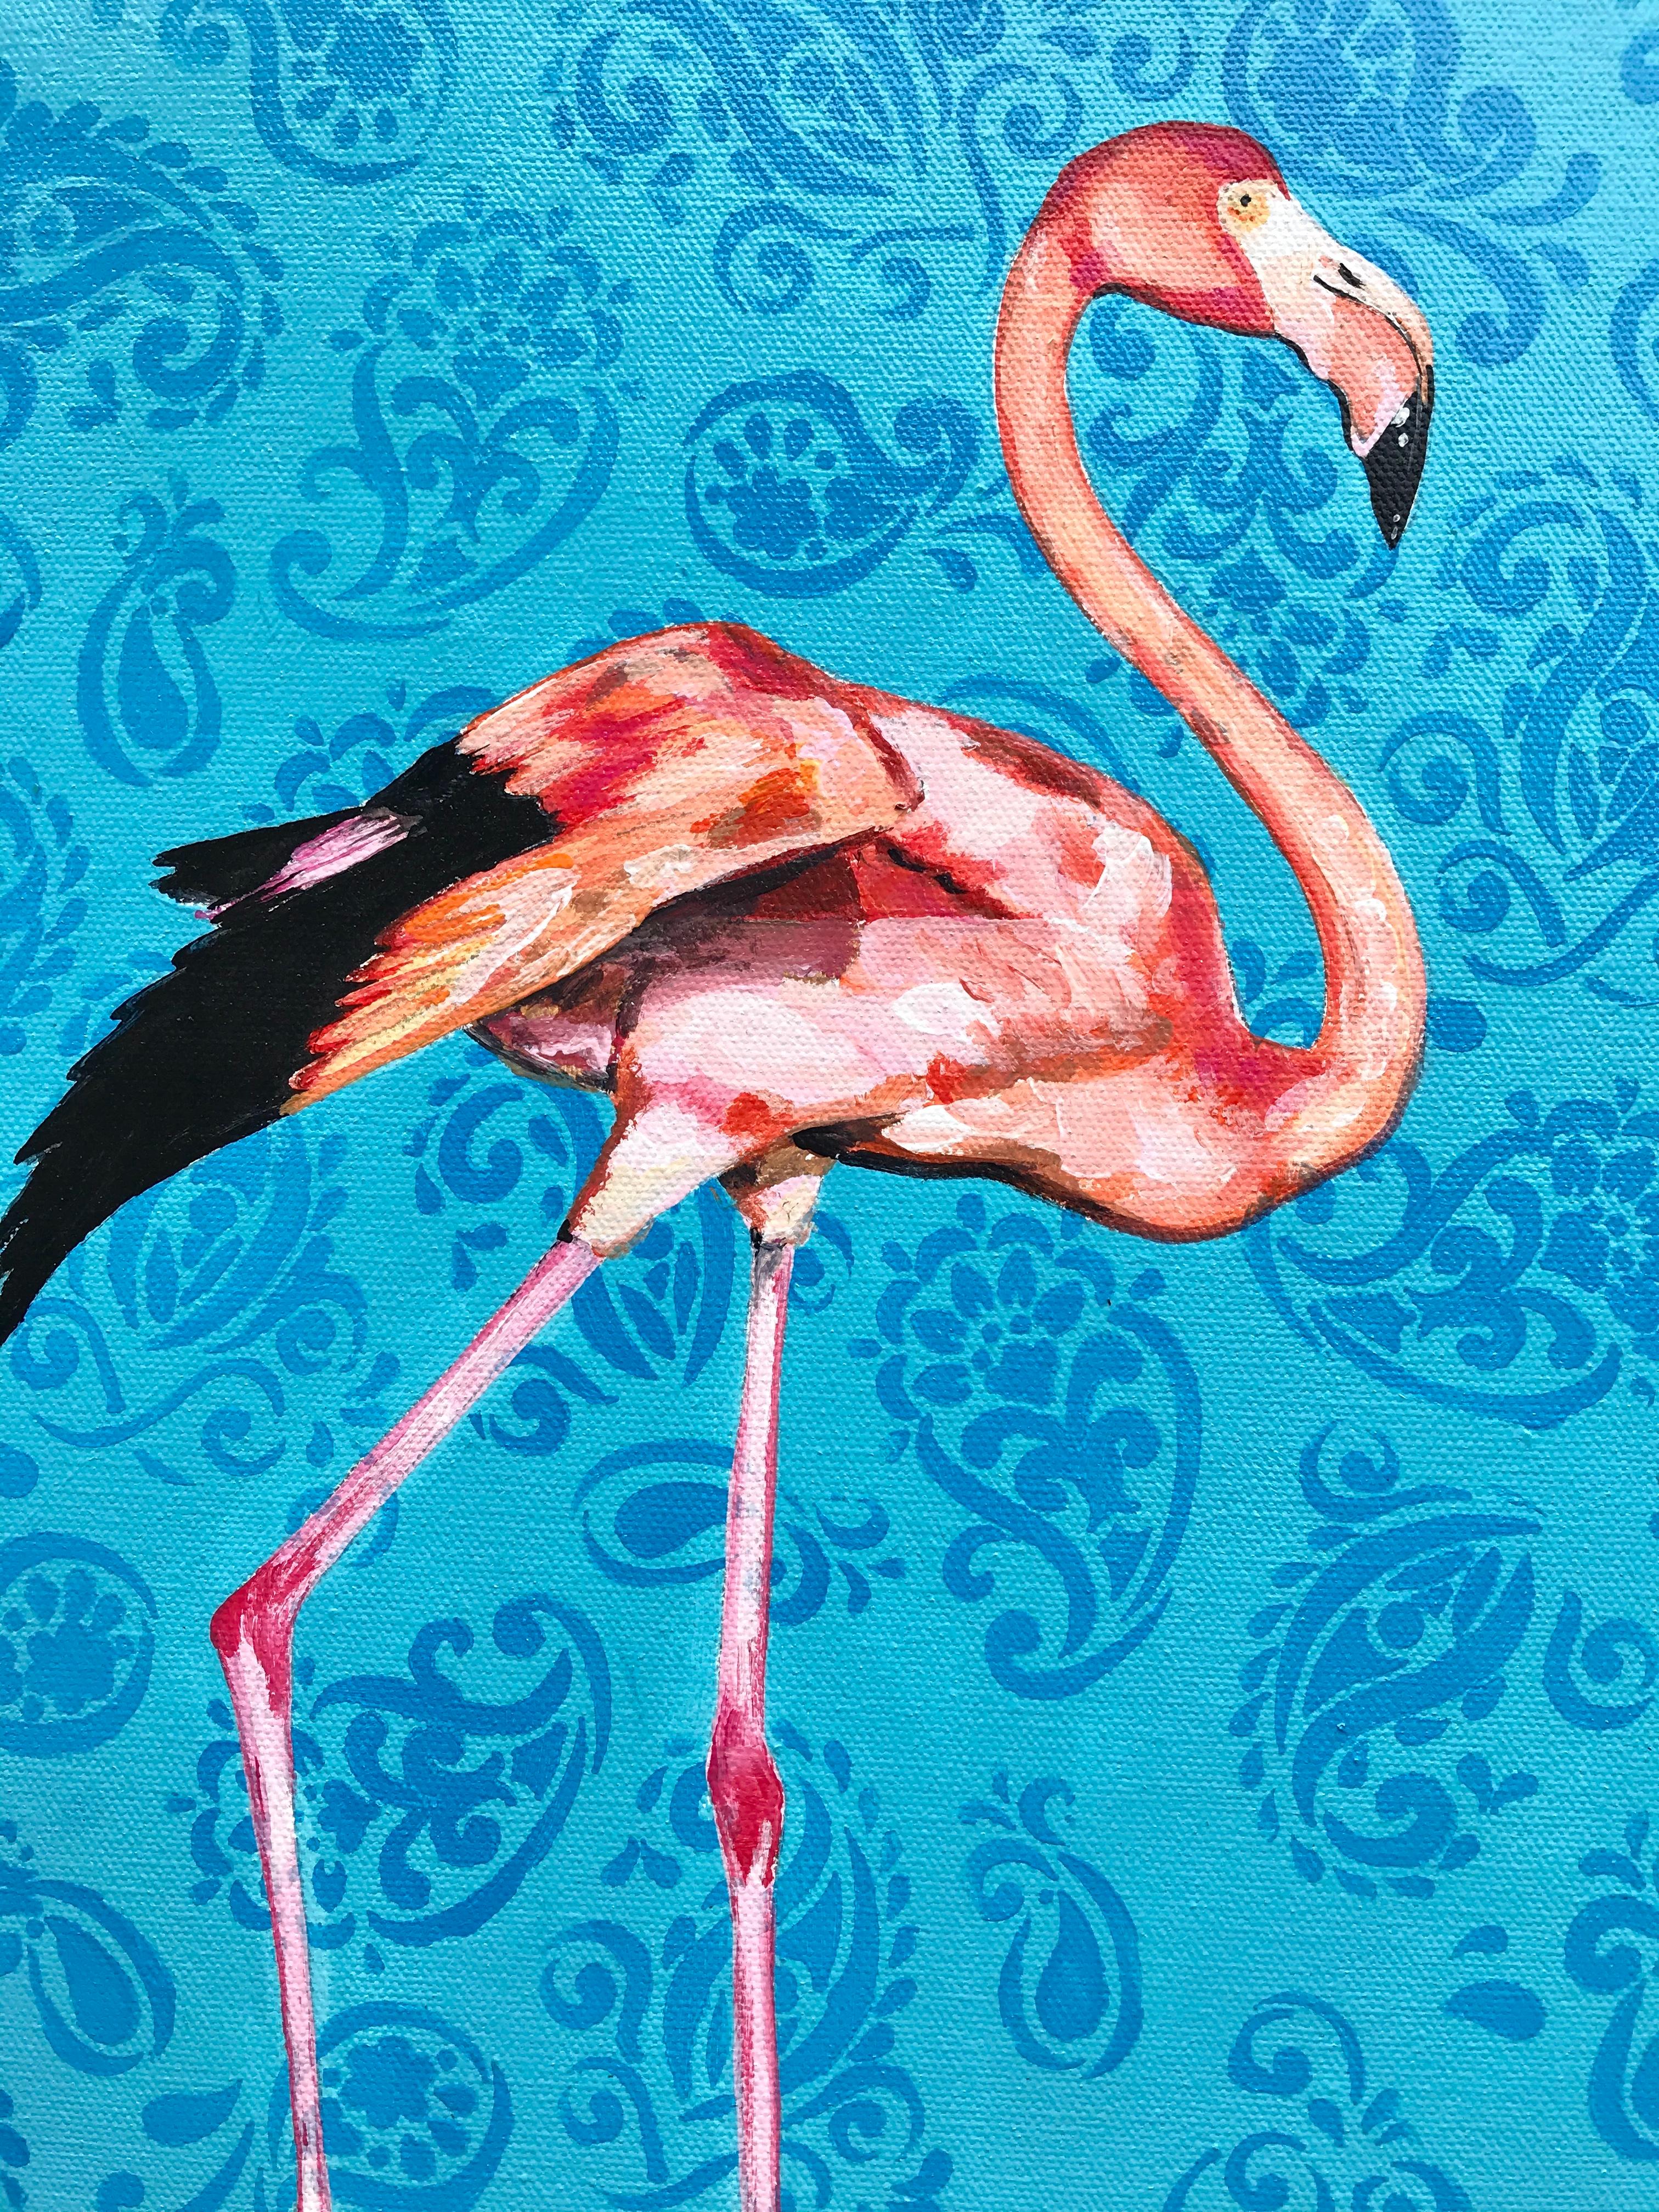 paintings of flamingos